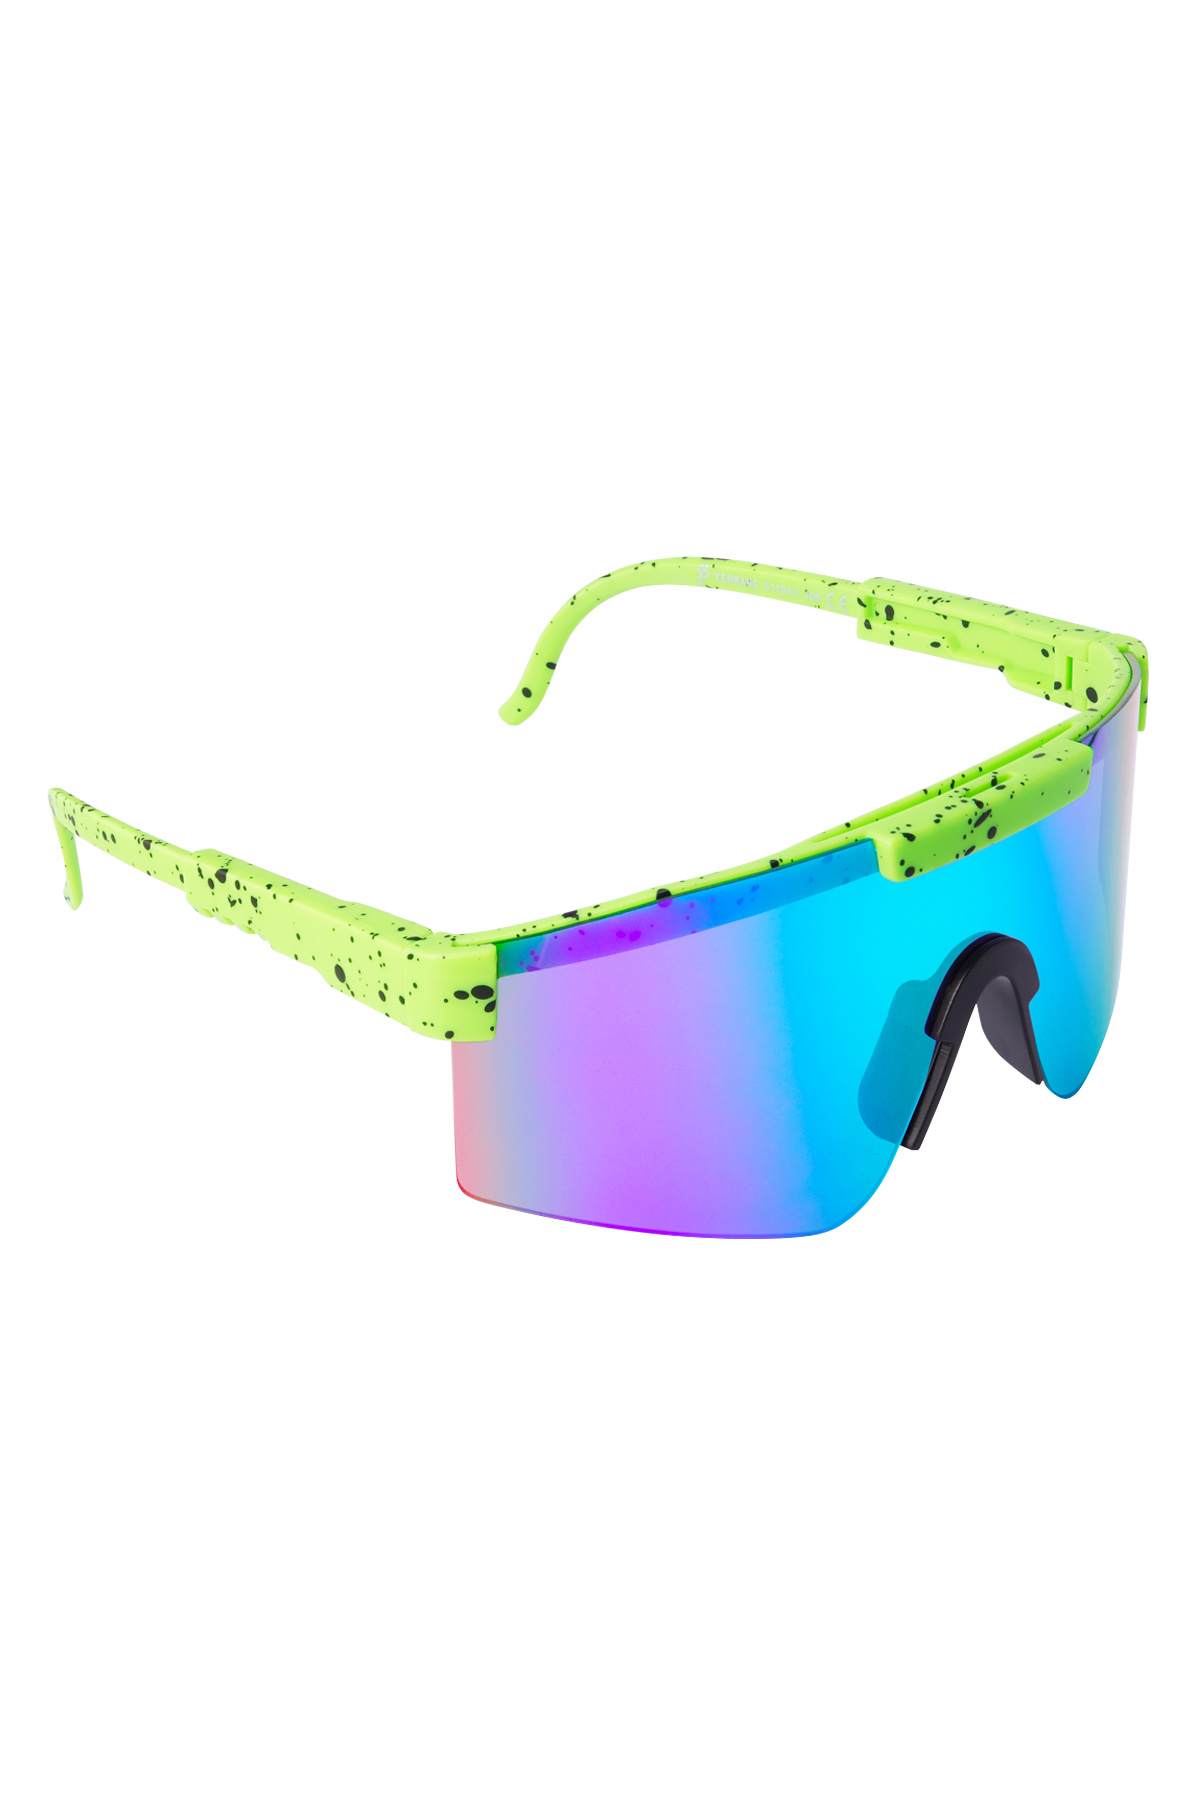 Sunglasses print colored lenses - green h5 